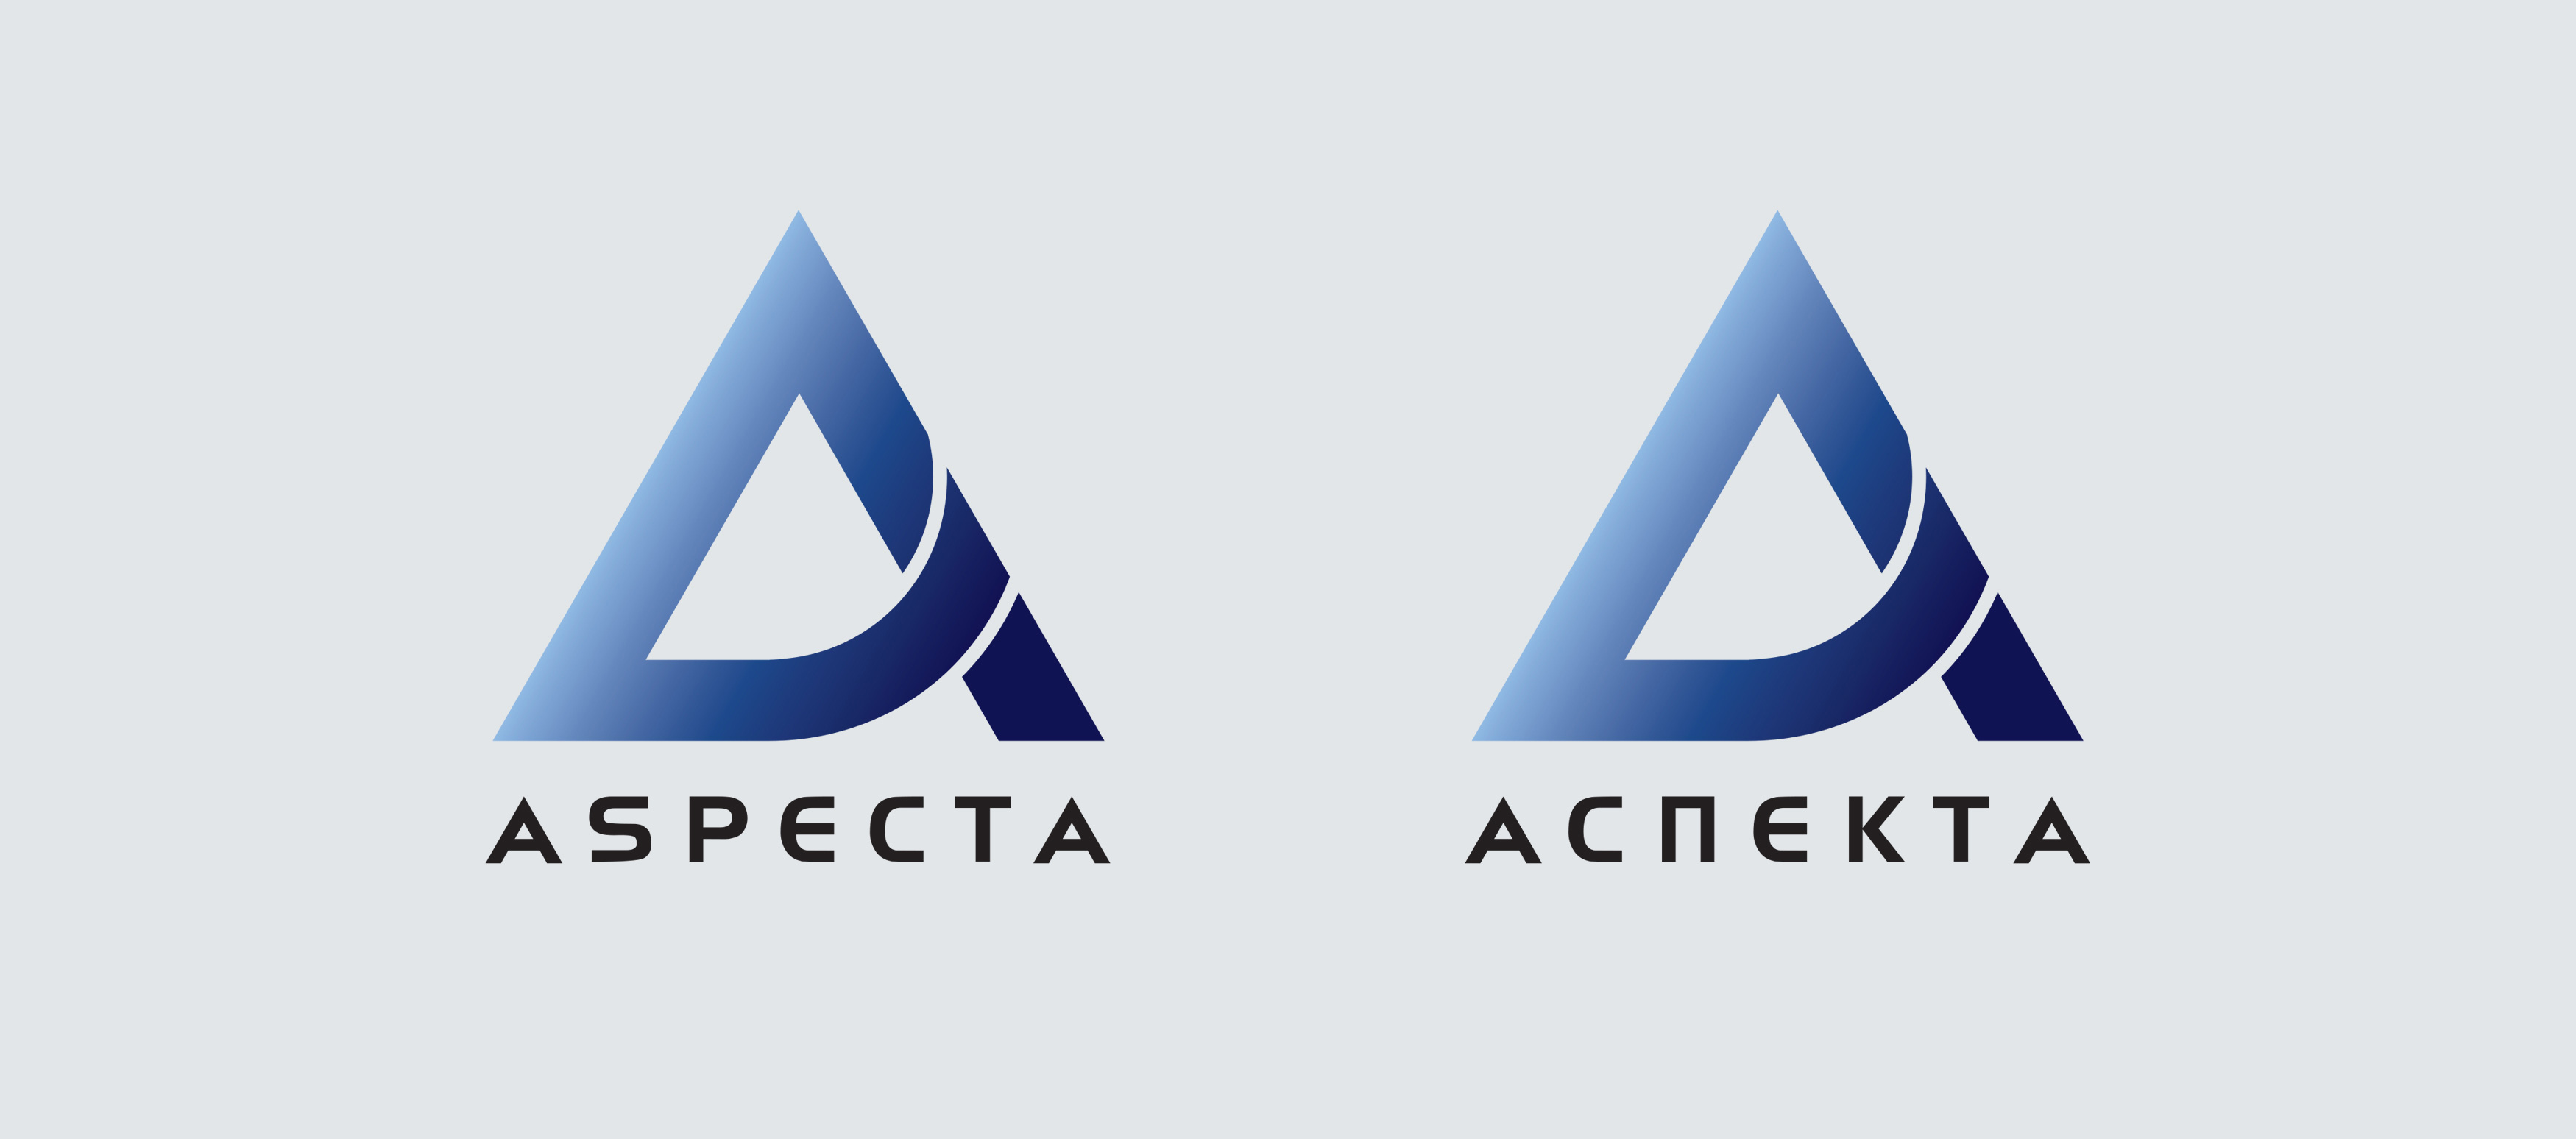 Aspecta_logo